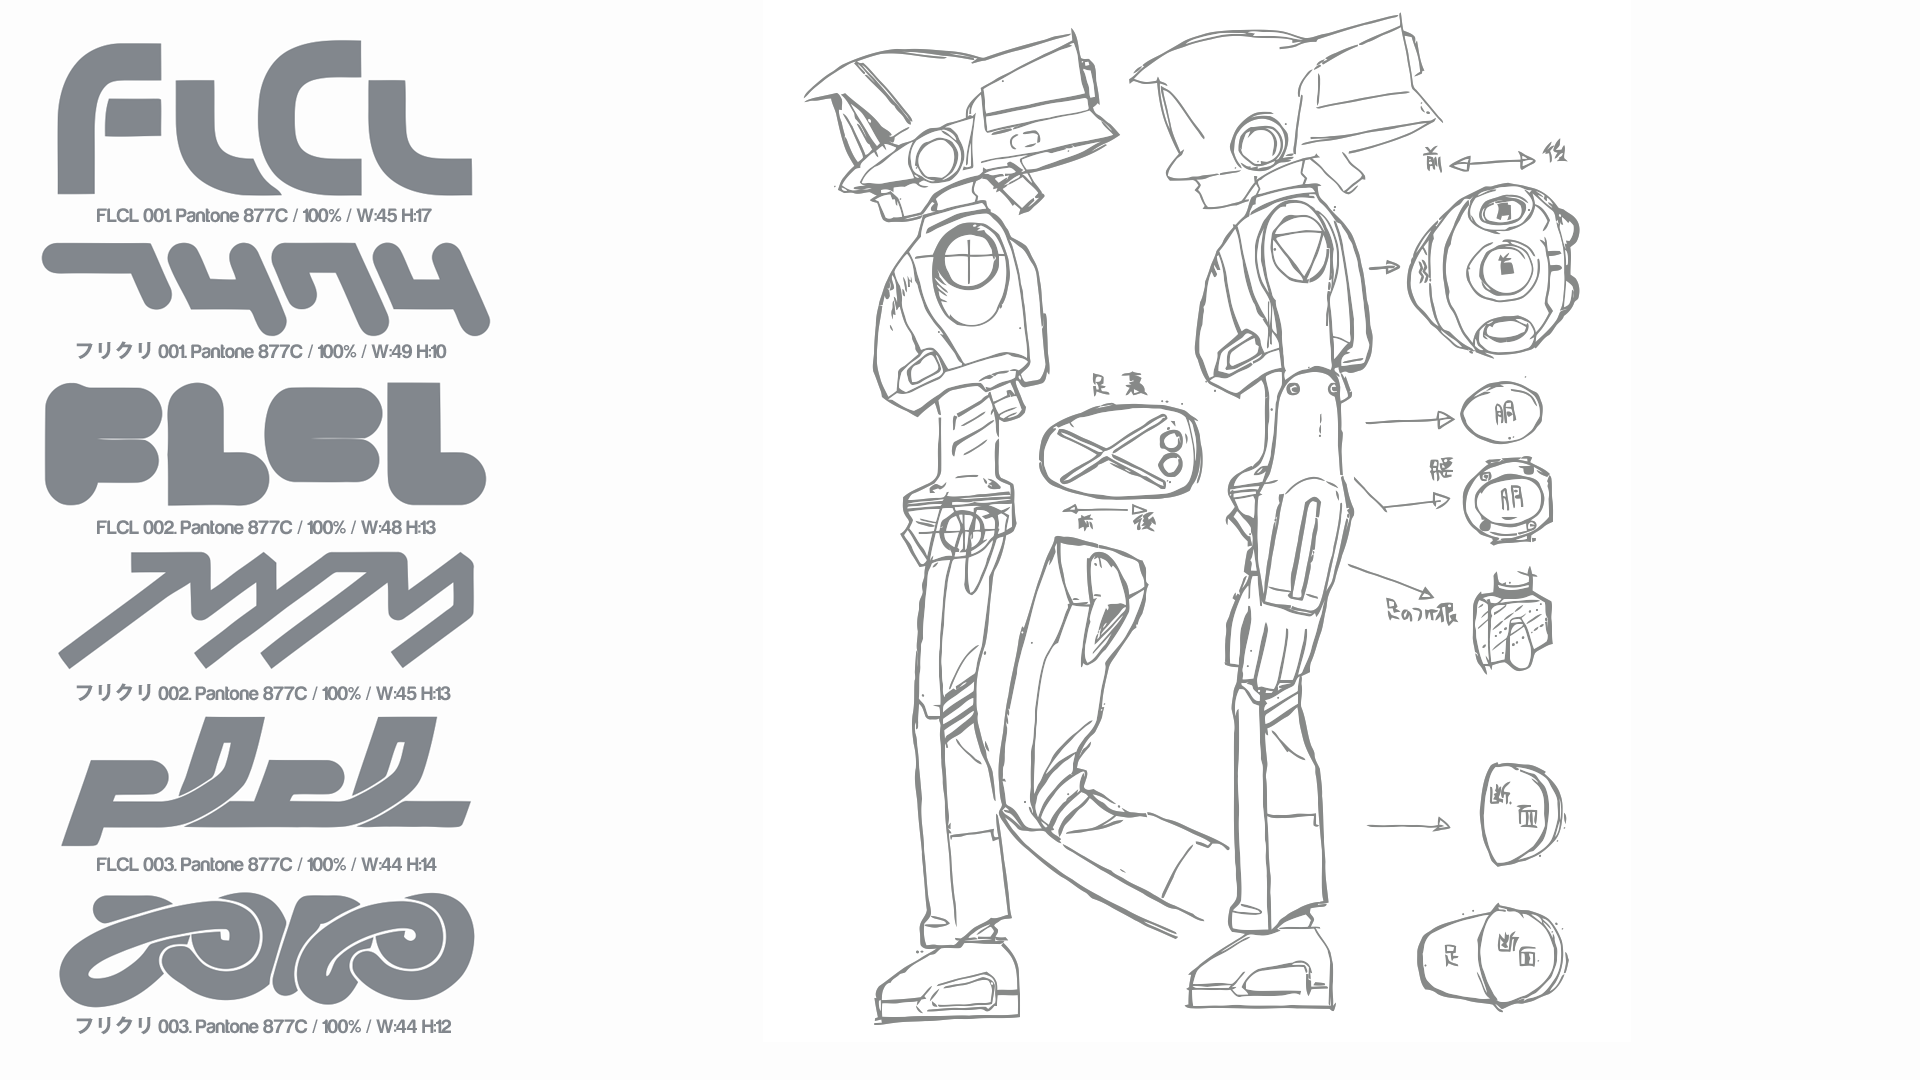 FLCL Haruhara Haruko Anime Robot Numbers 1920x1080